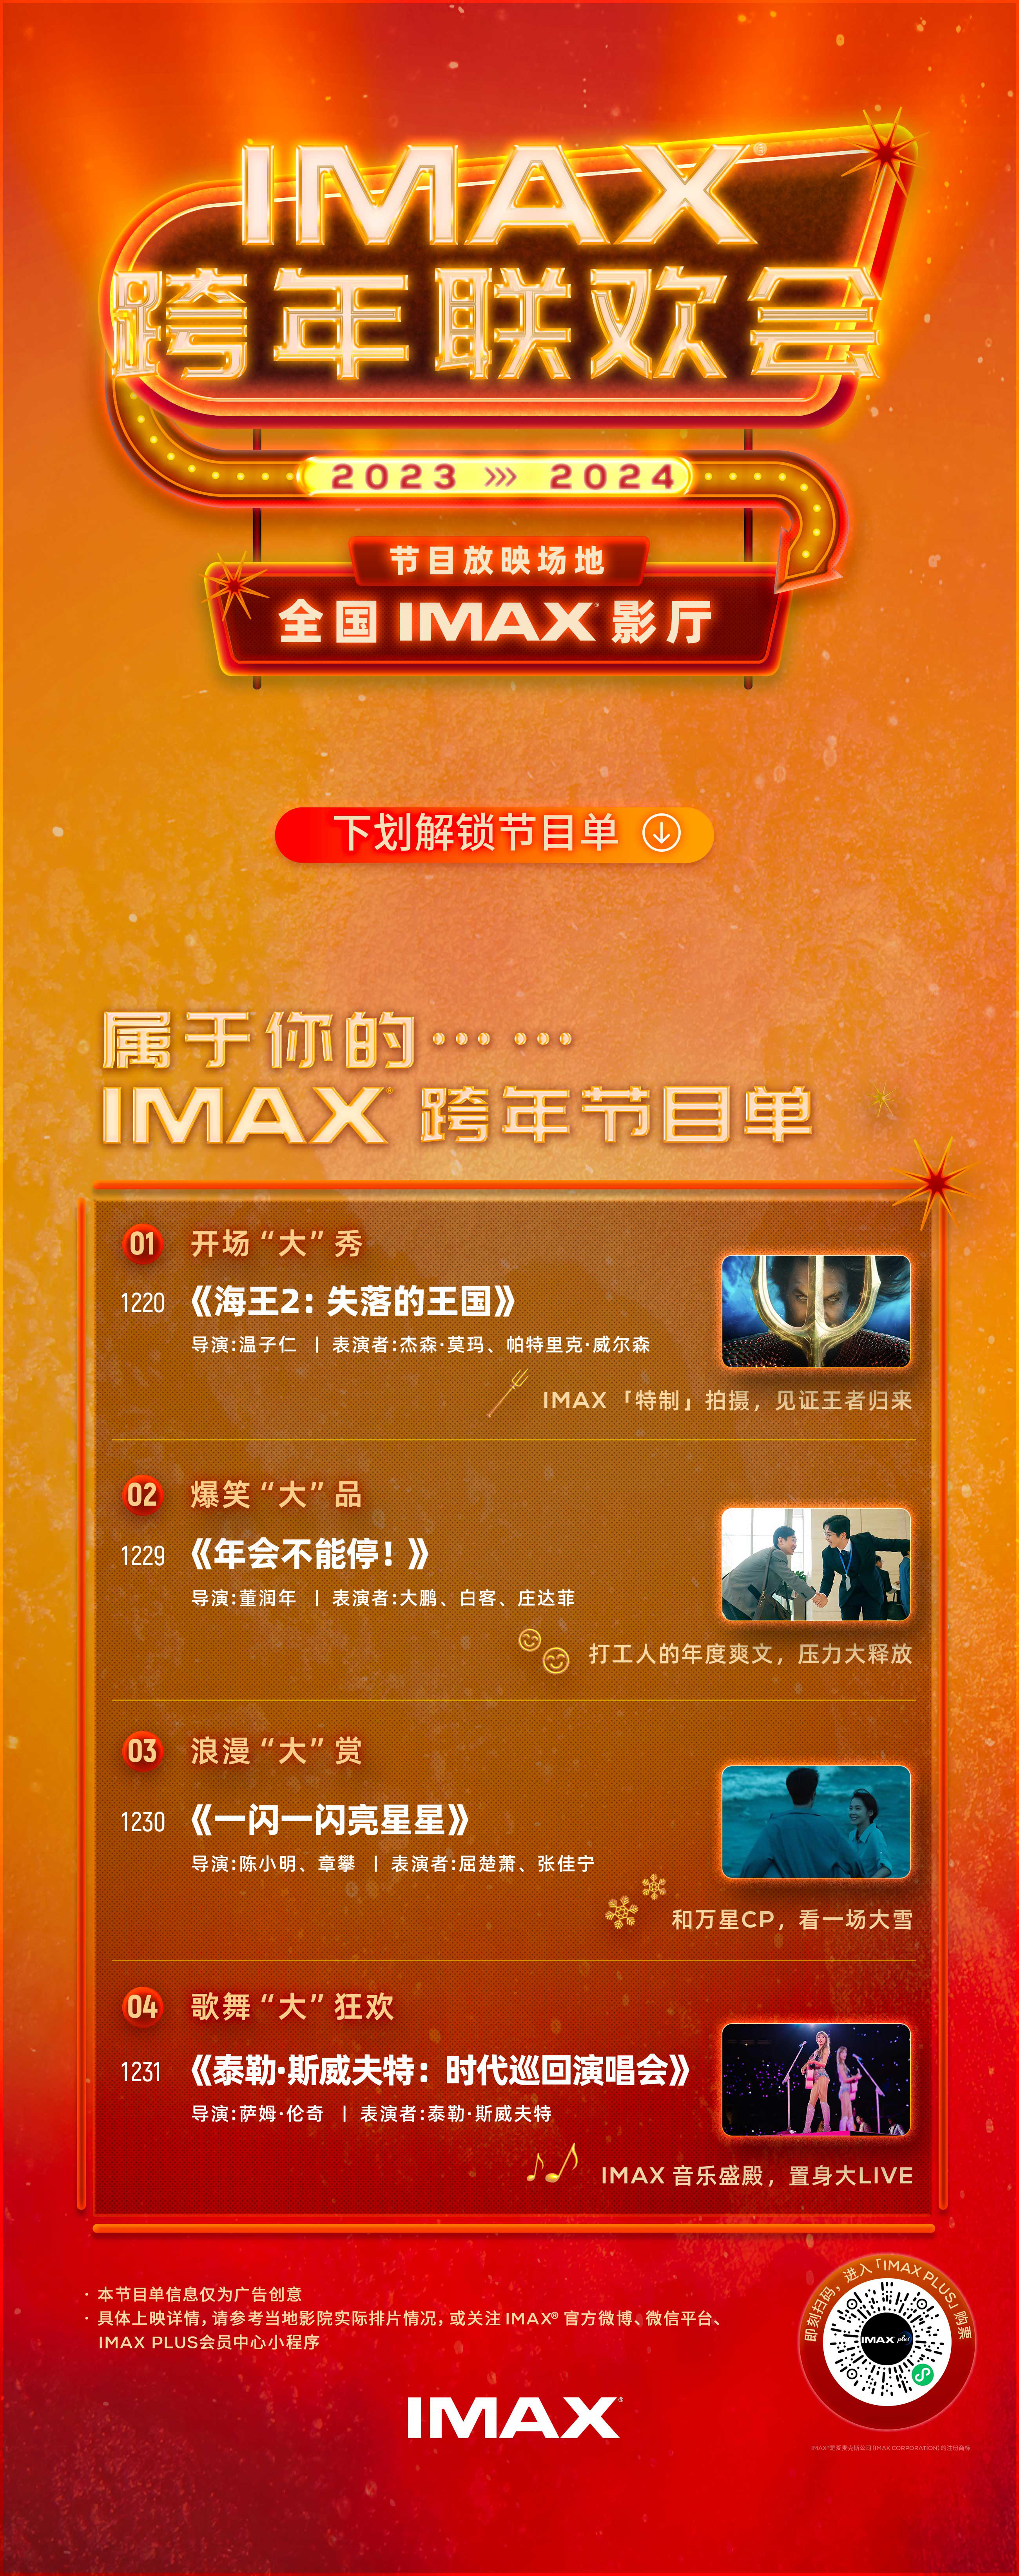 IMAX跨年联欢会节目单出炉 海内外佳作集结银幕